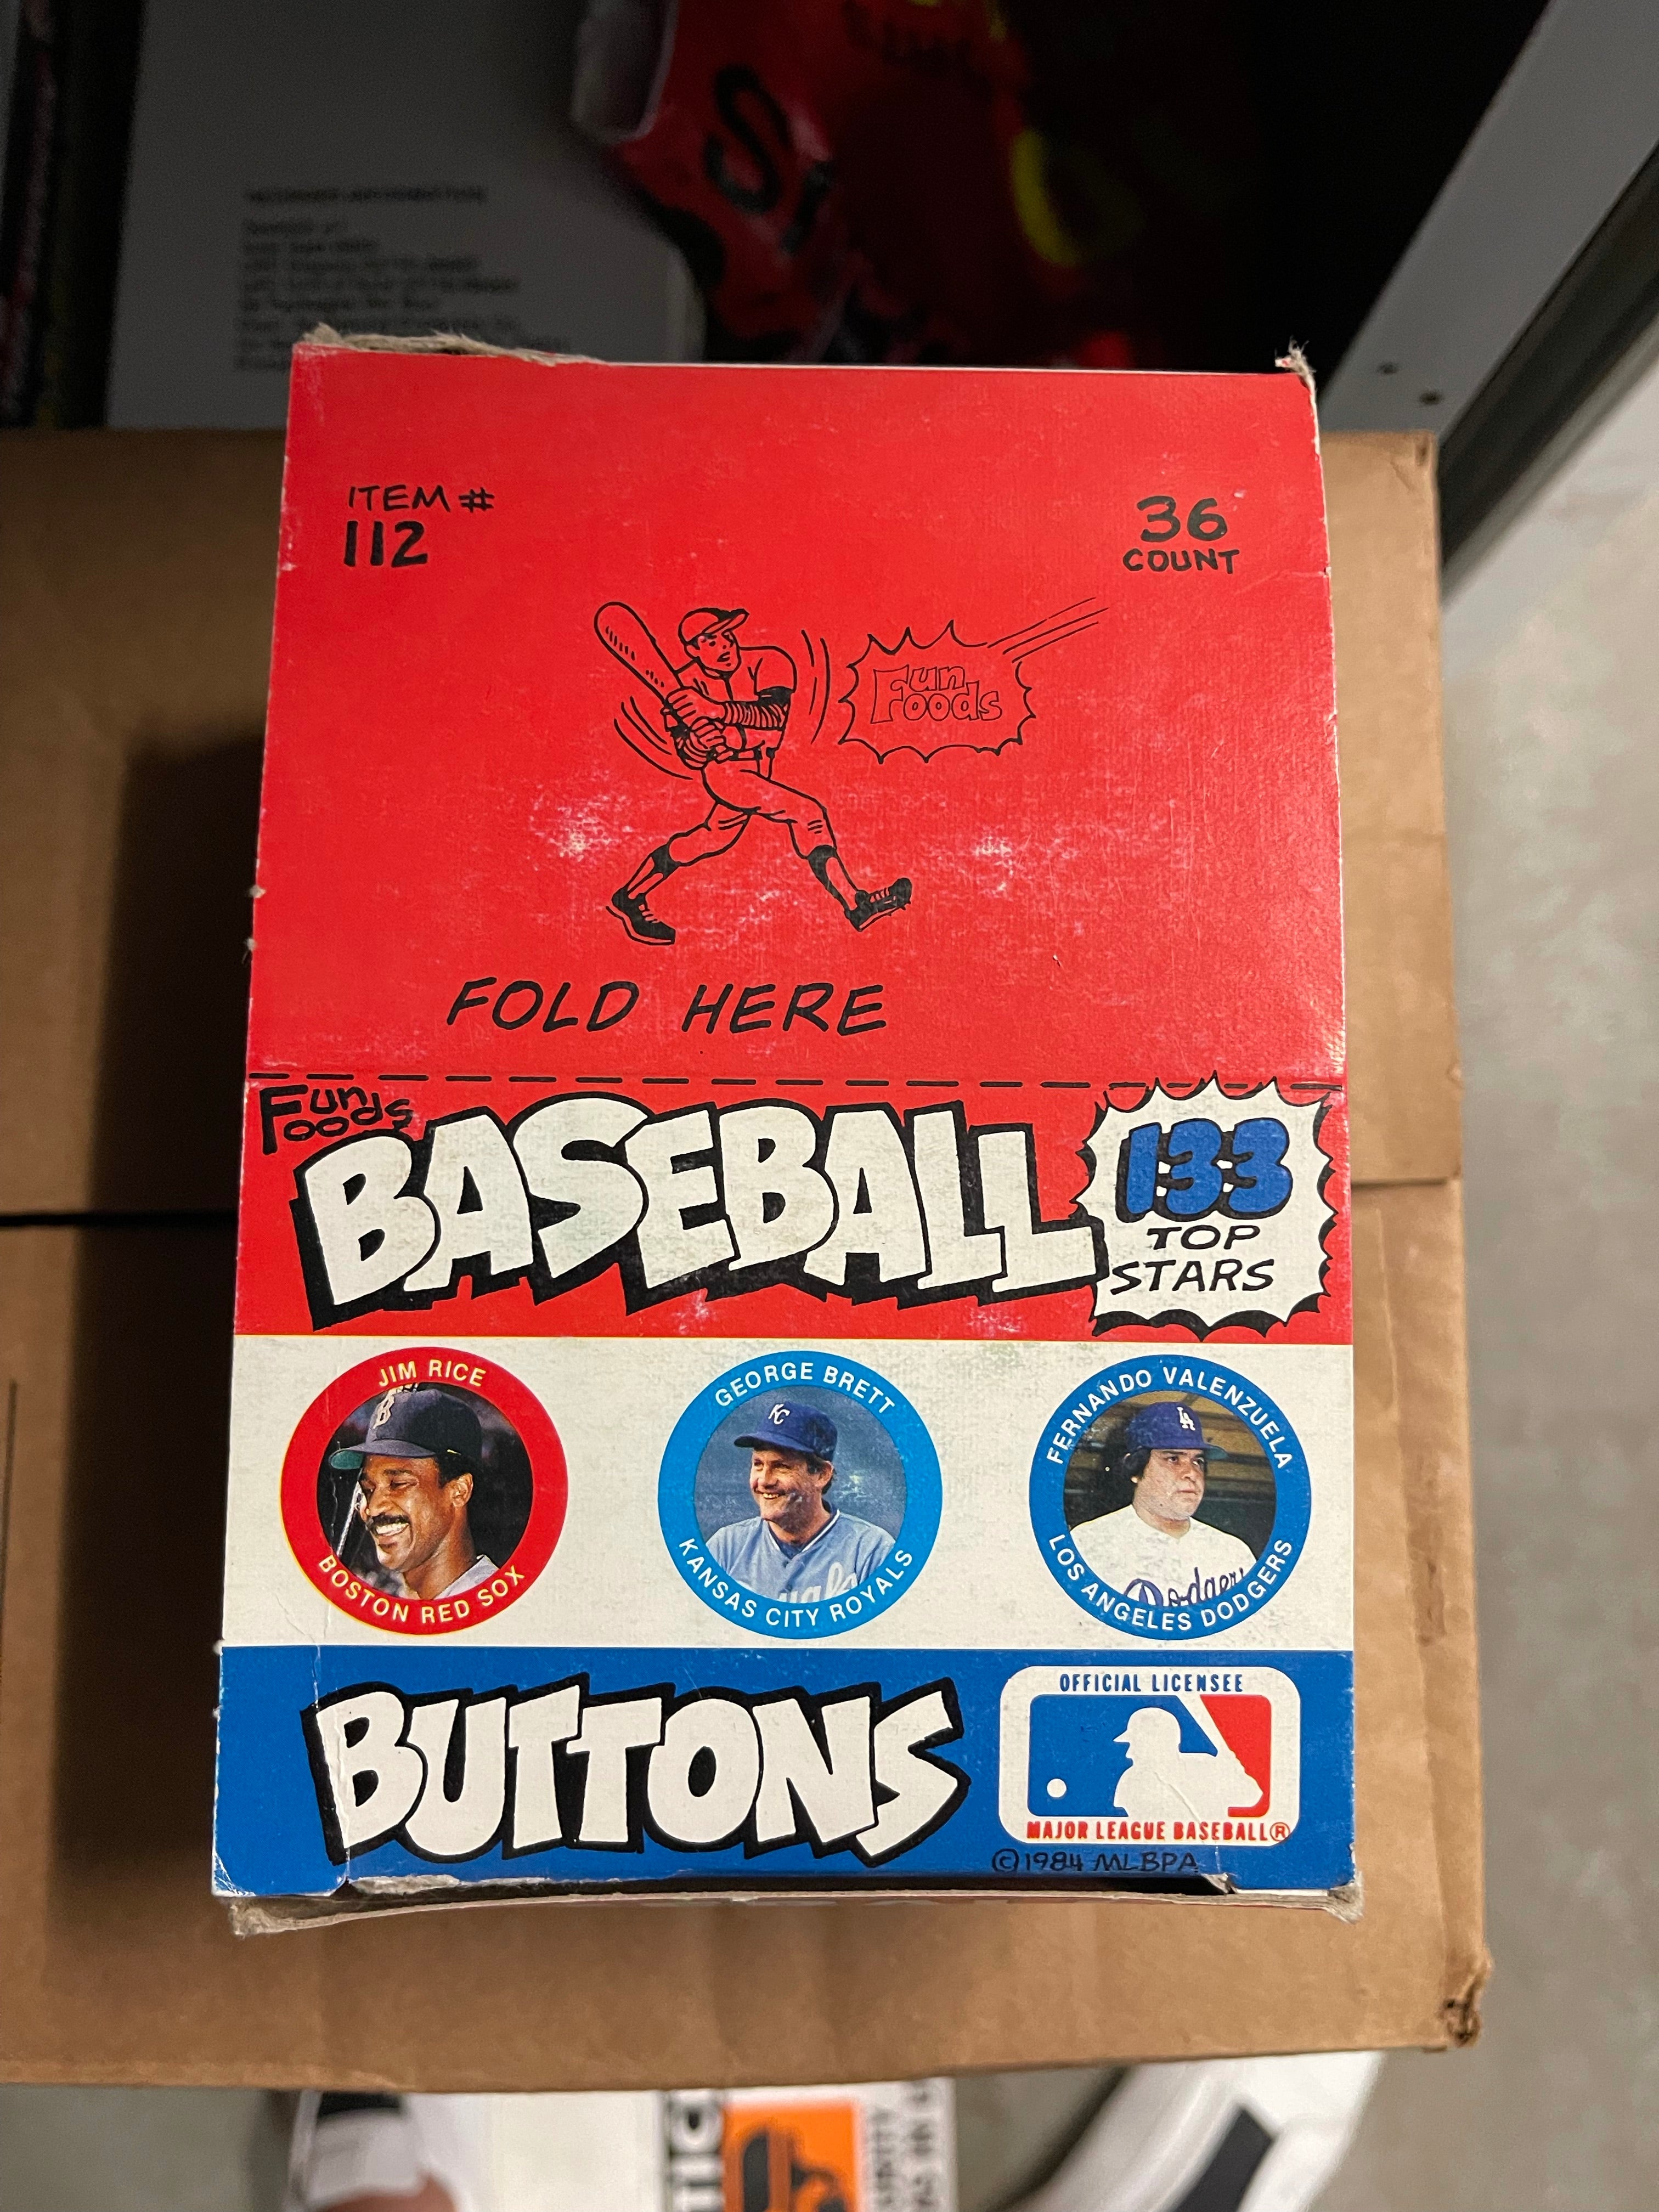 1984 Baseball stars Buttons 36 packs box